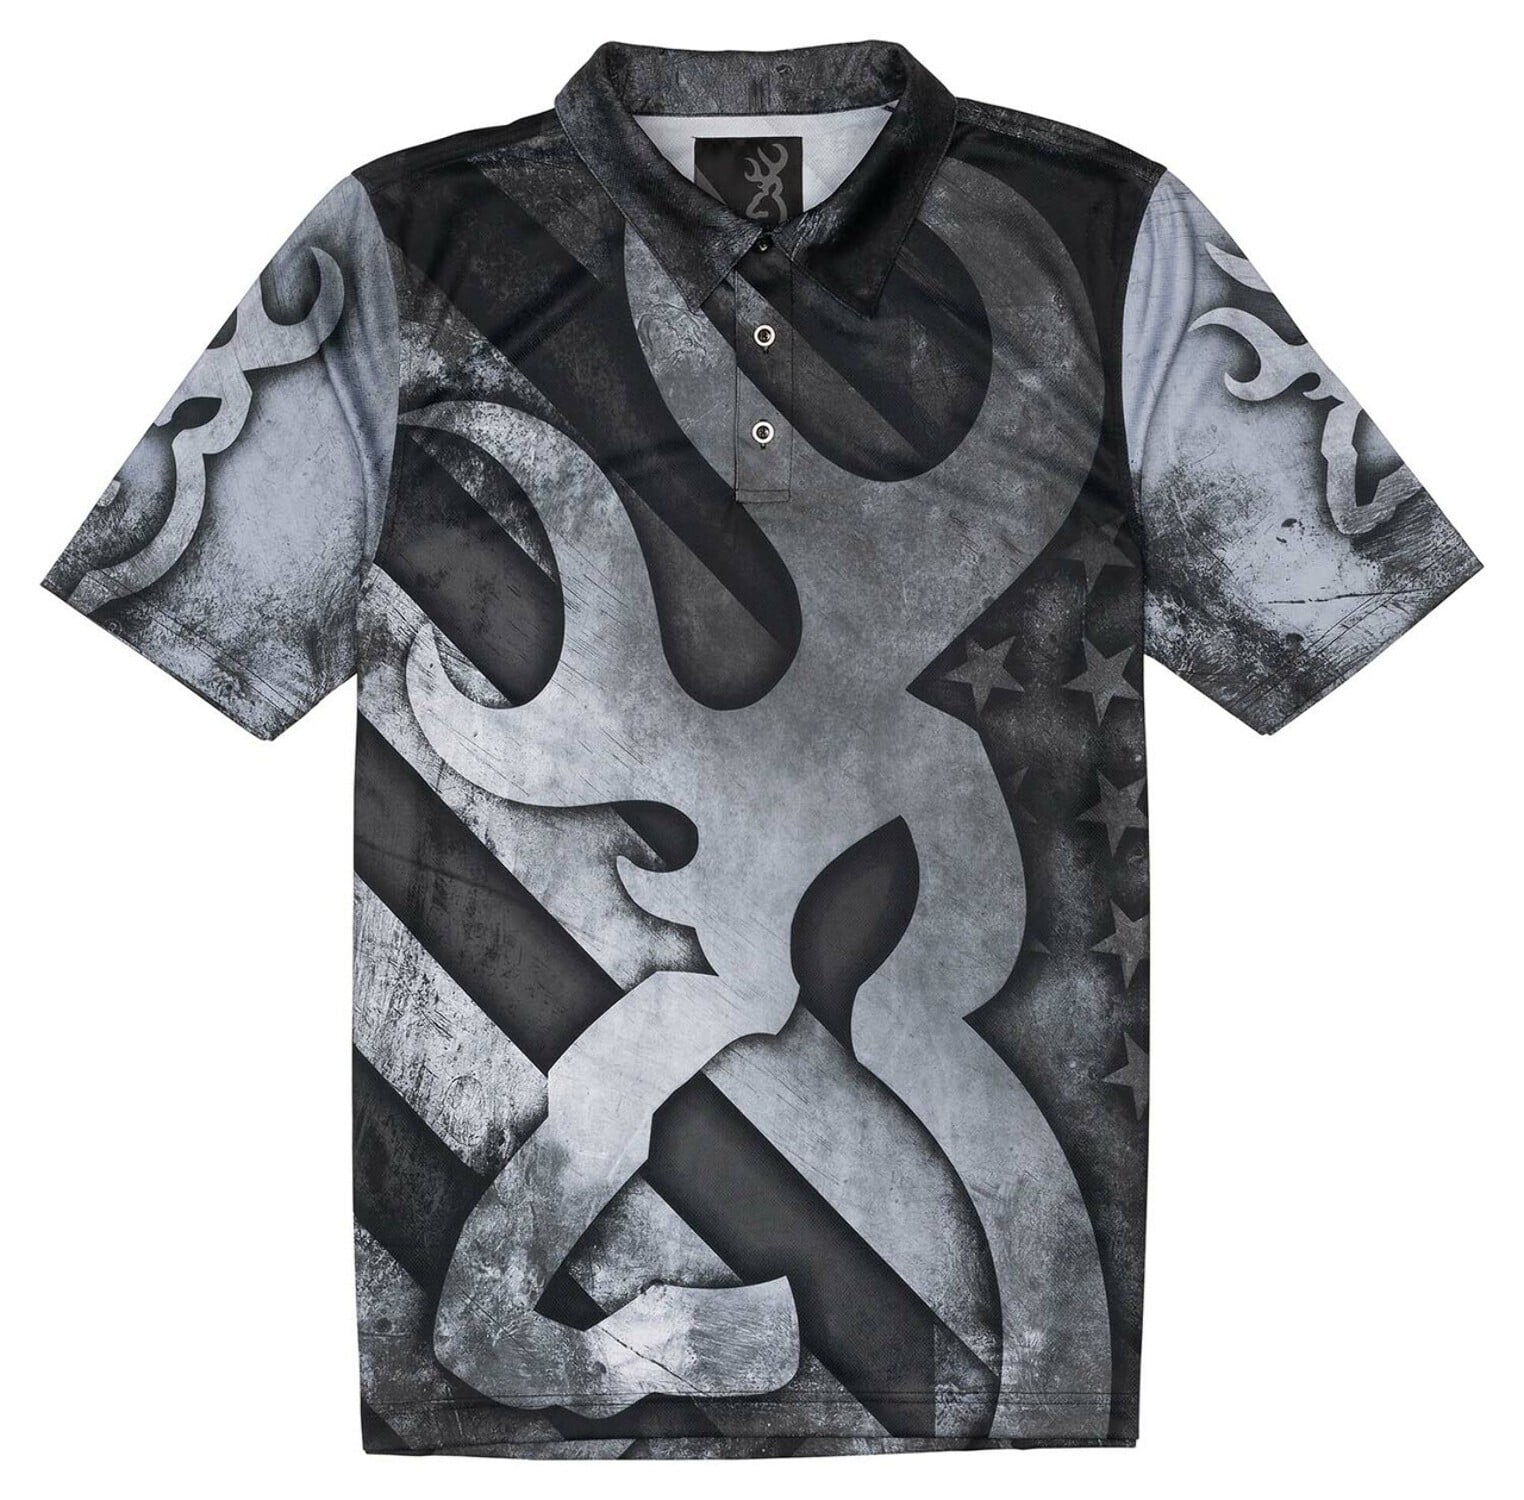 Clean Blacktip Long Sleeve UPF 50+ Dry-Fit Shirt – Saltwater Born